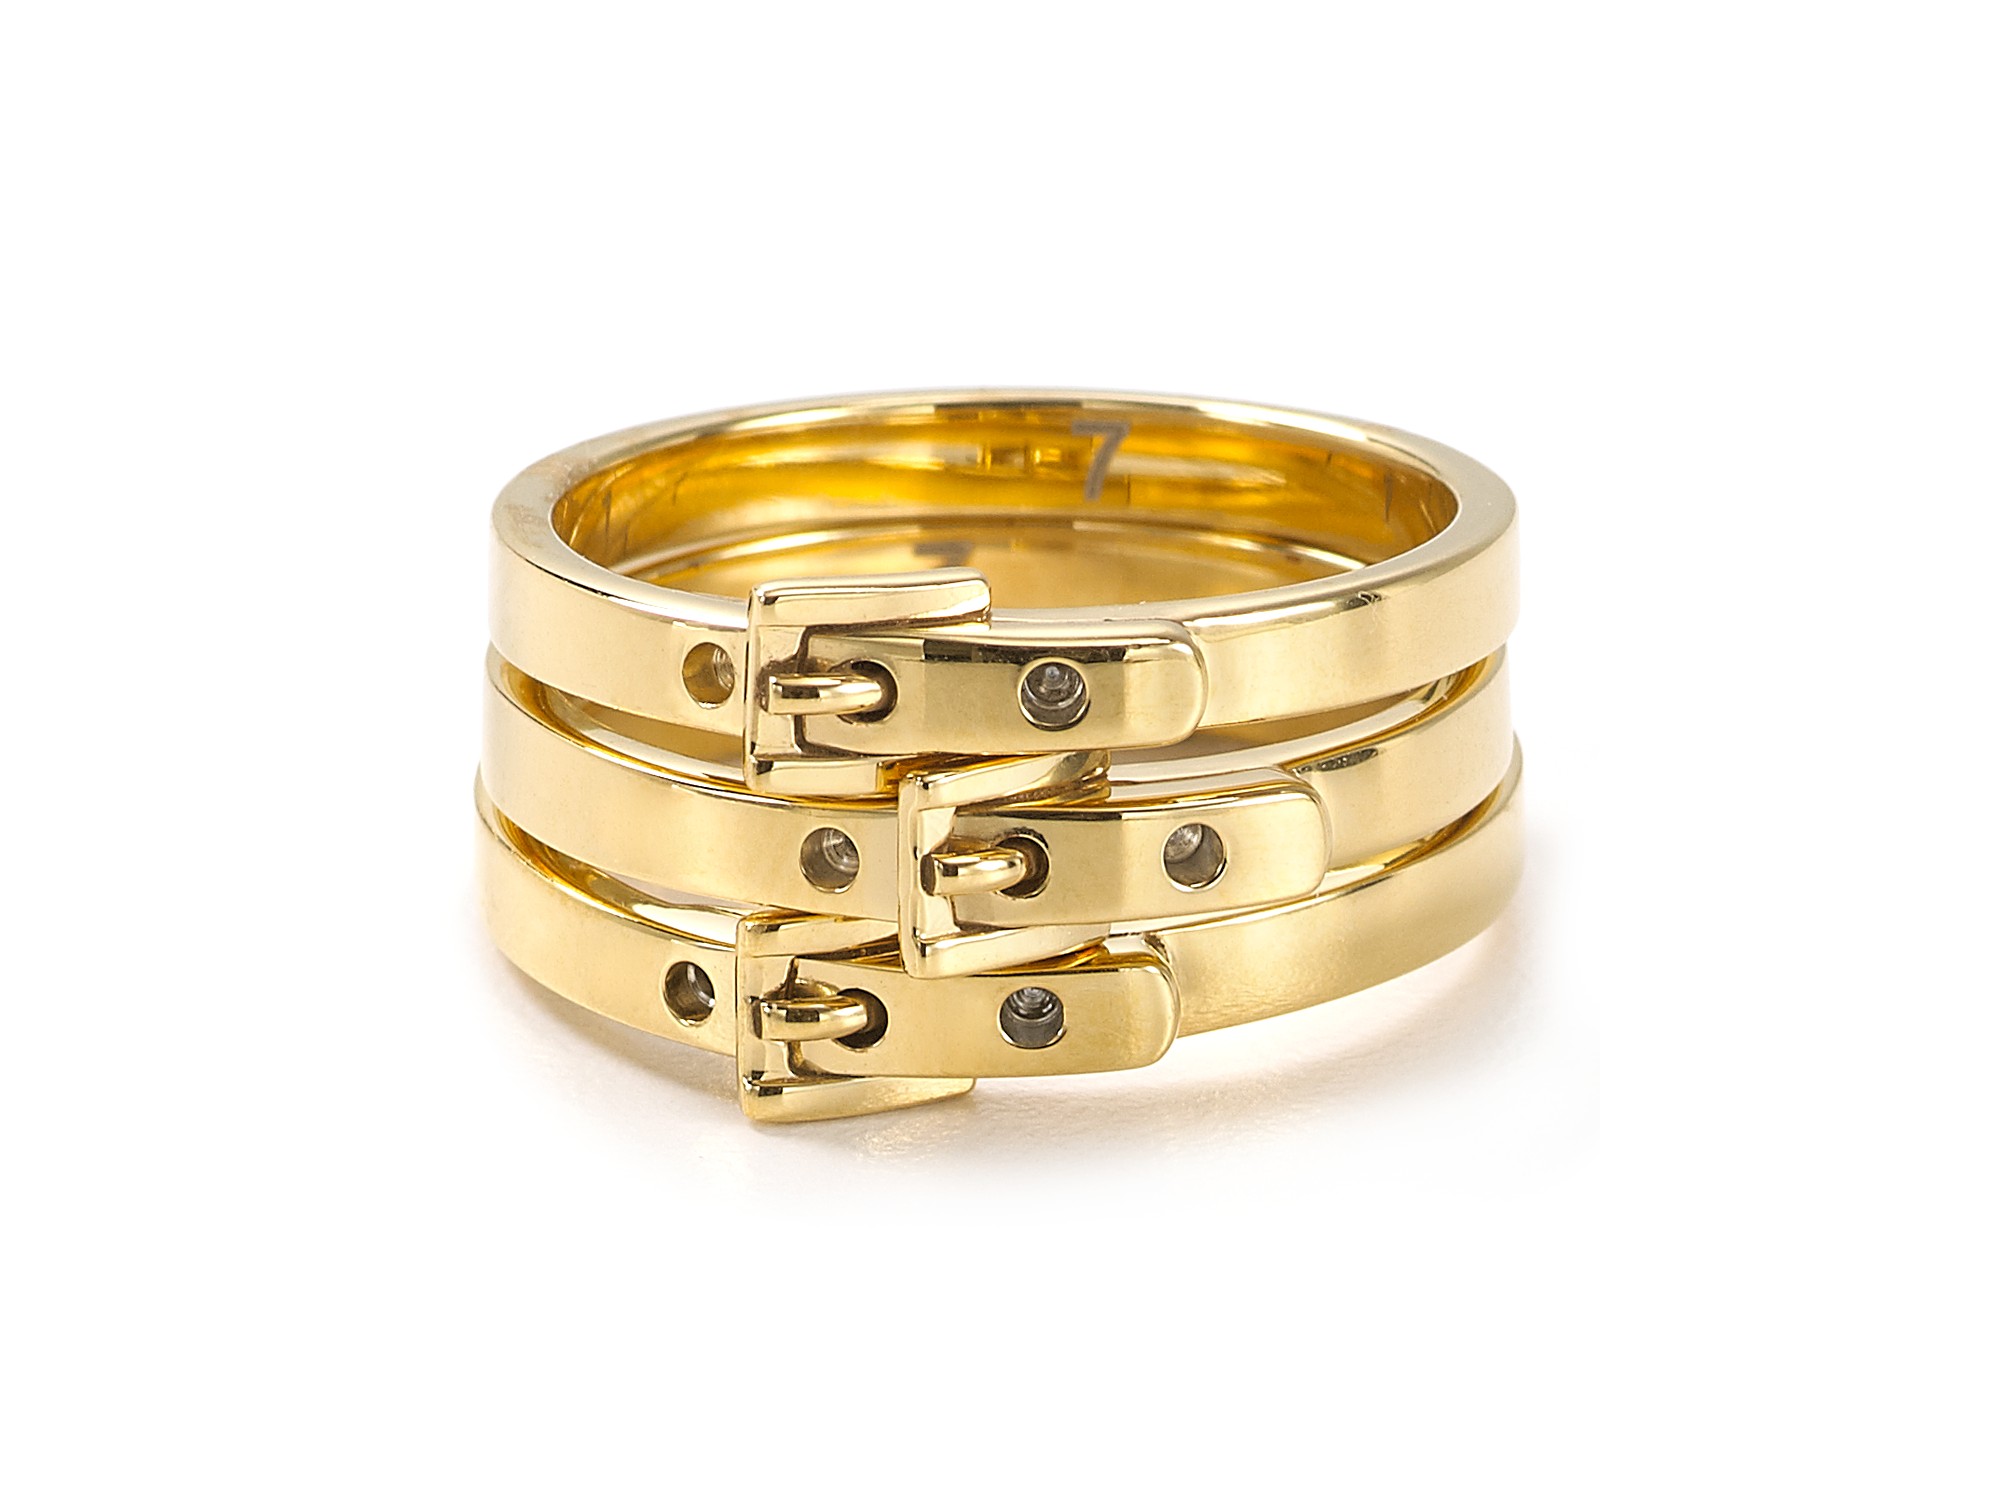 Michael Kors Skinny Buckle Ring Set in Gold (Metallic) - Lyst